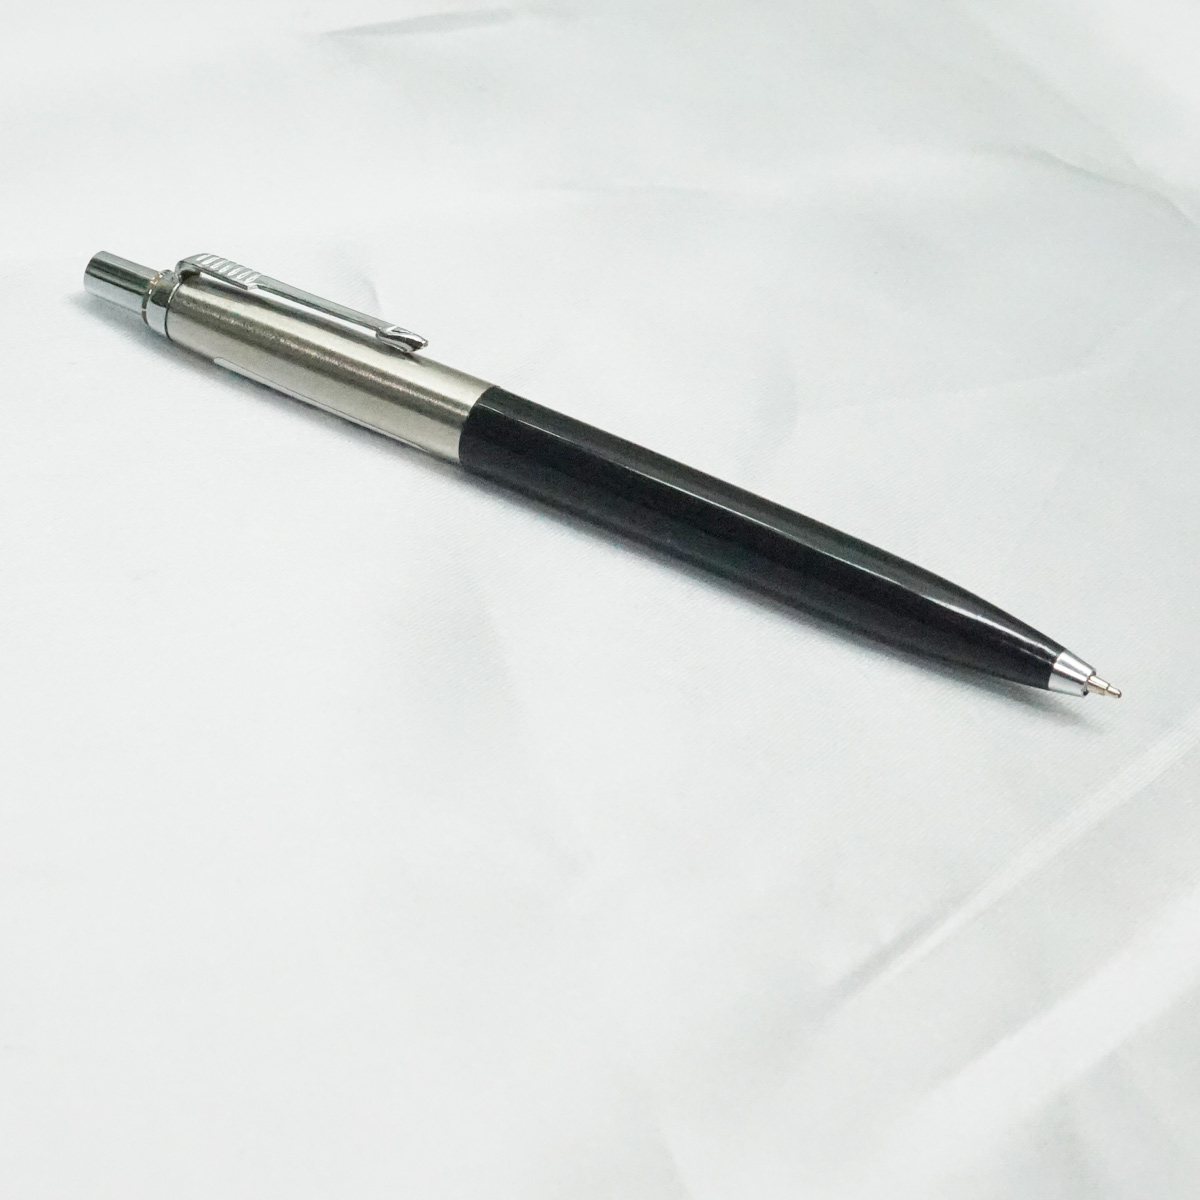 Penhouse.in Black Color Body With Silver Clip Fine Tip Retractable Ball Pen SKU 21966